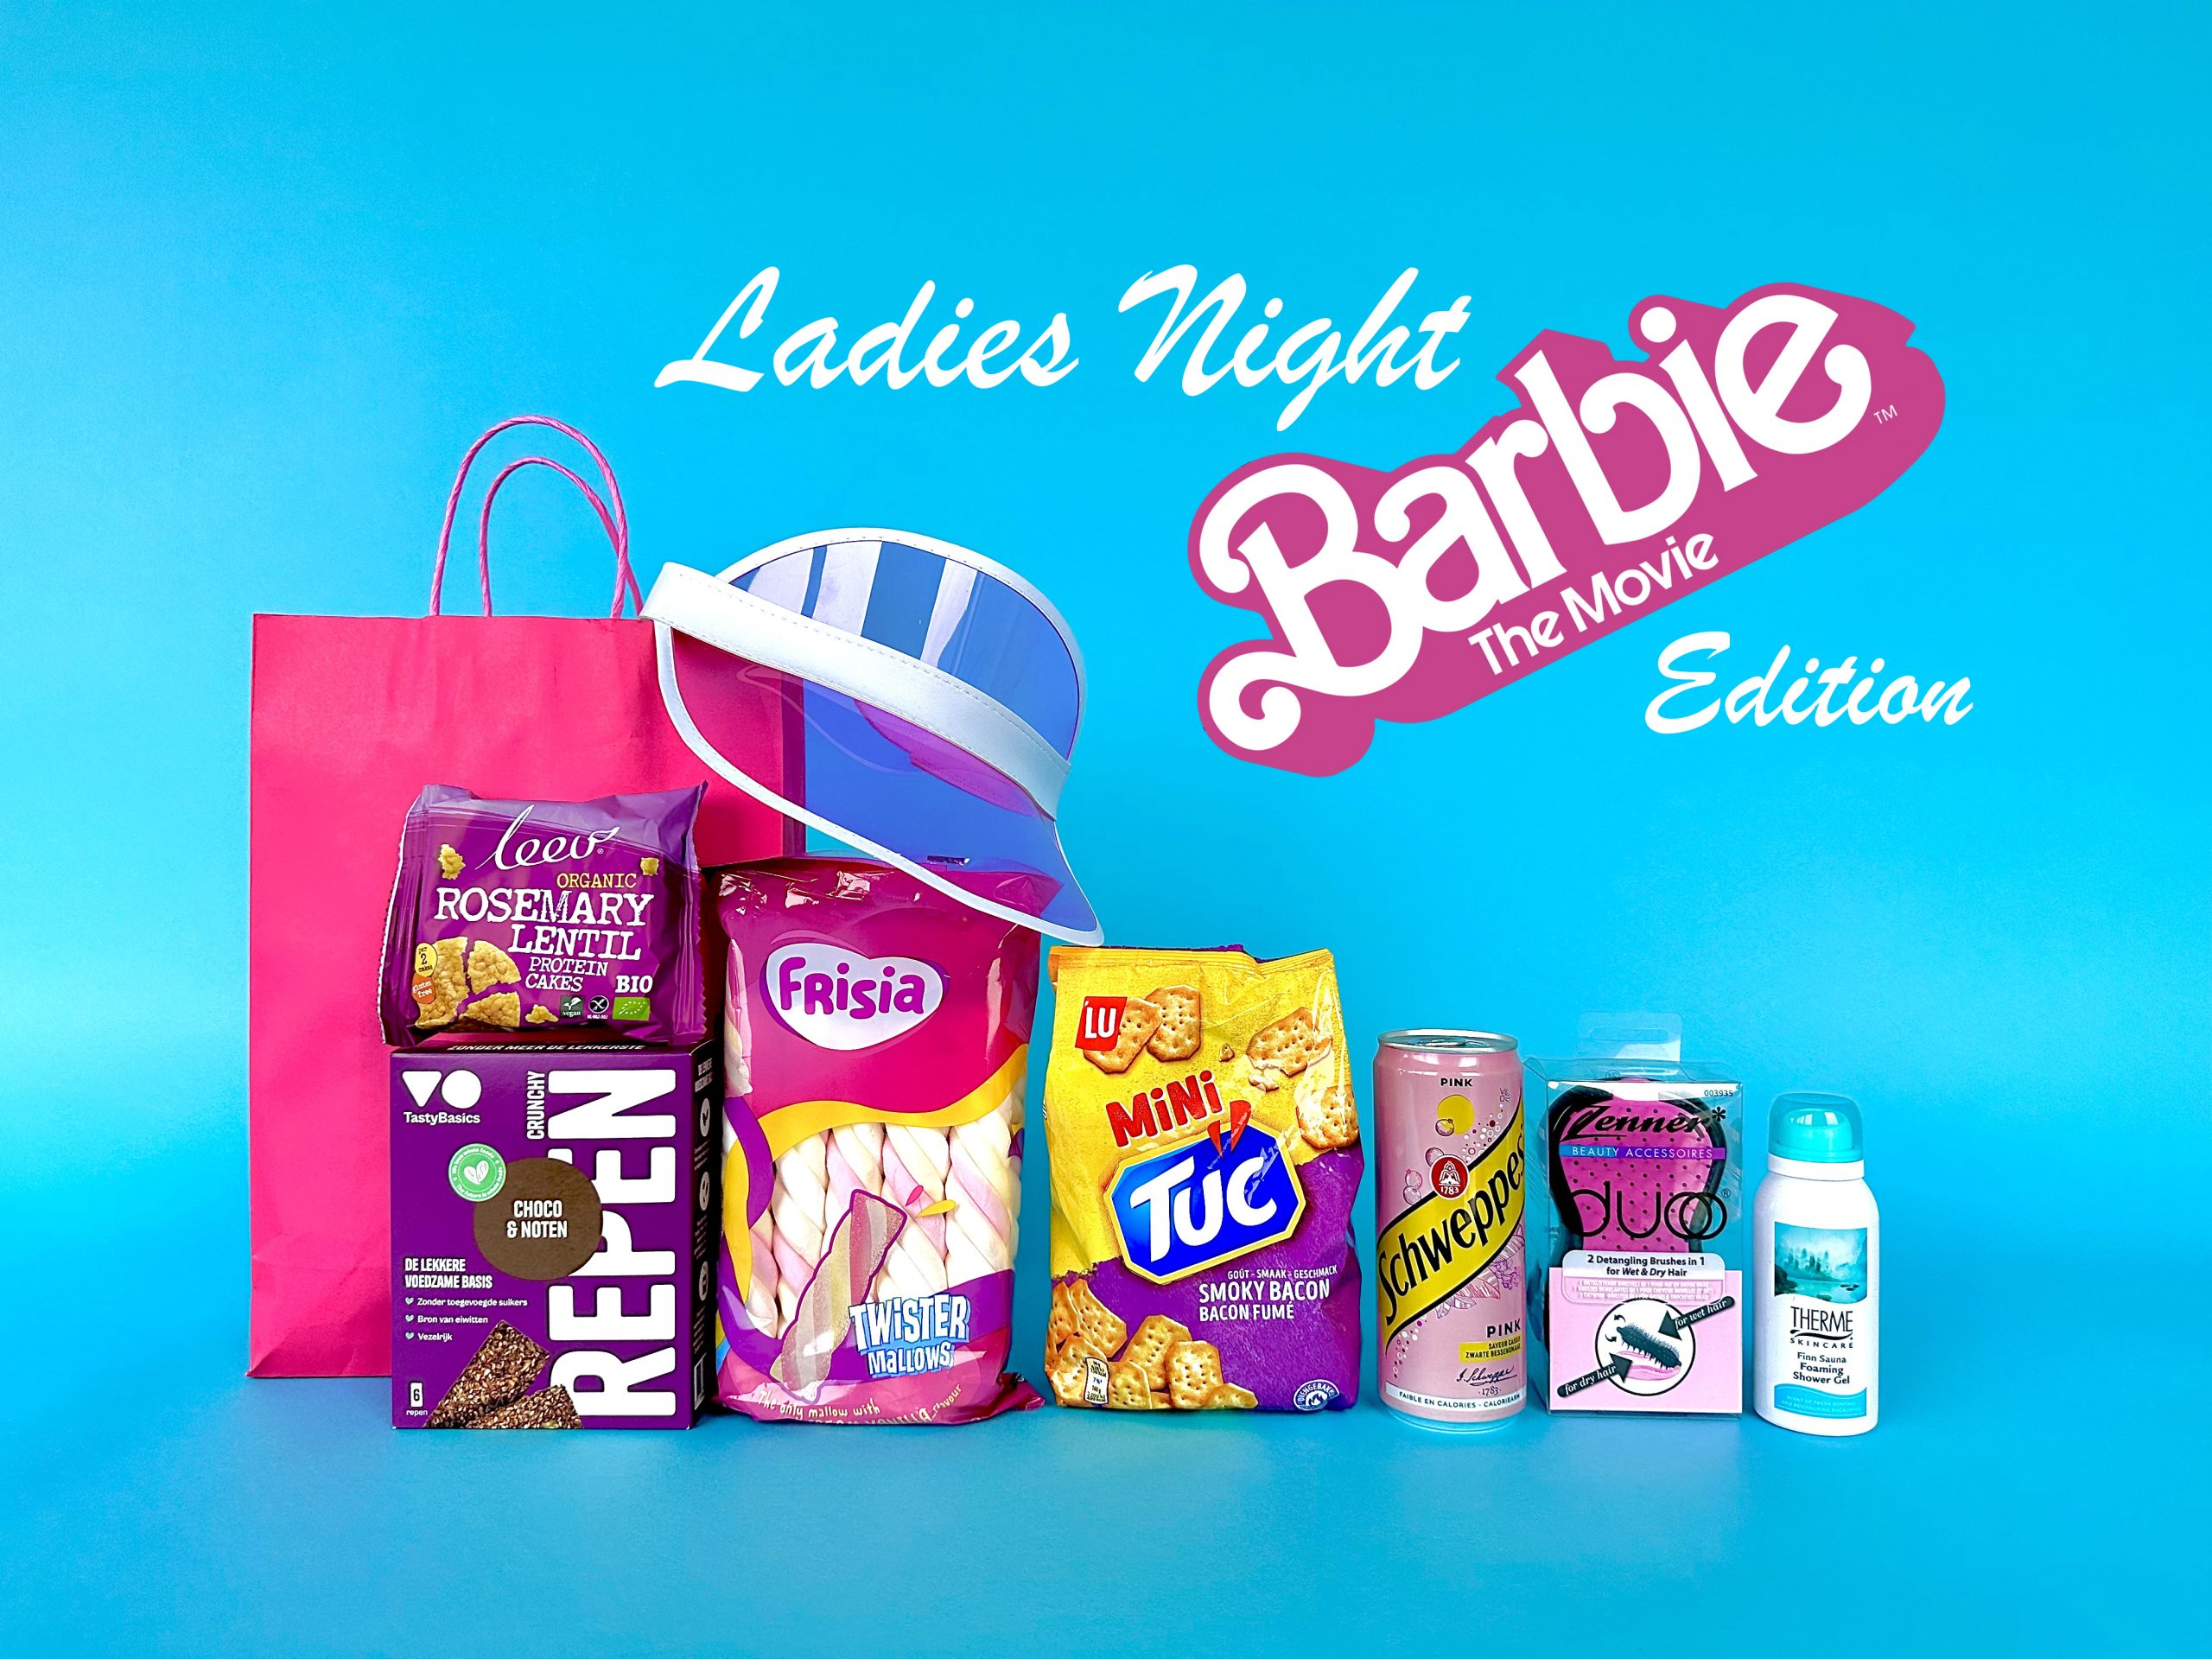 Goodiebags Ladies Night Special “Barbie” the Movie